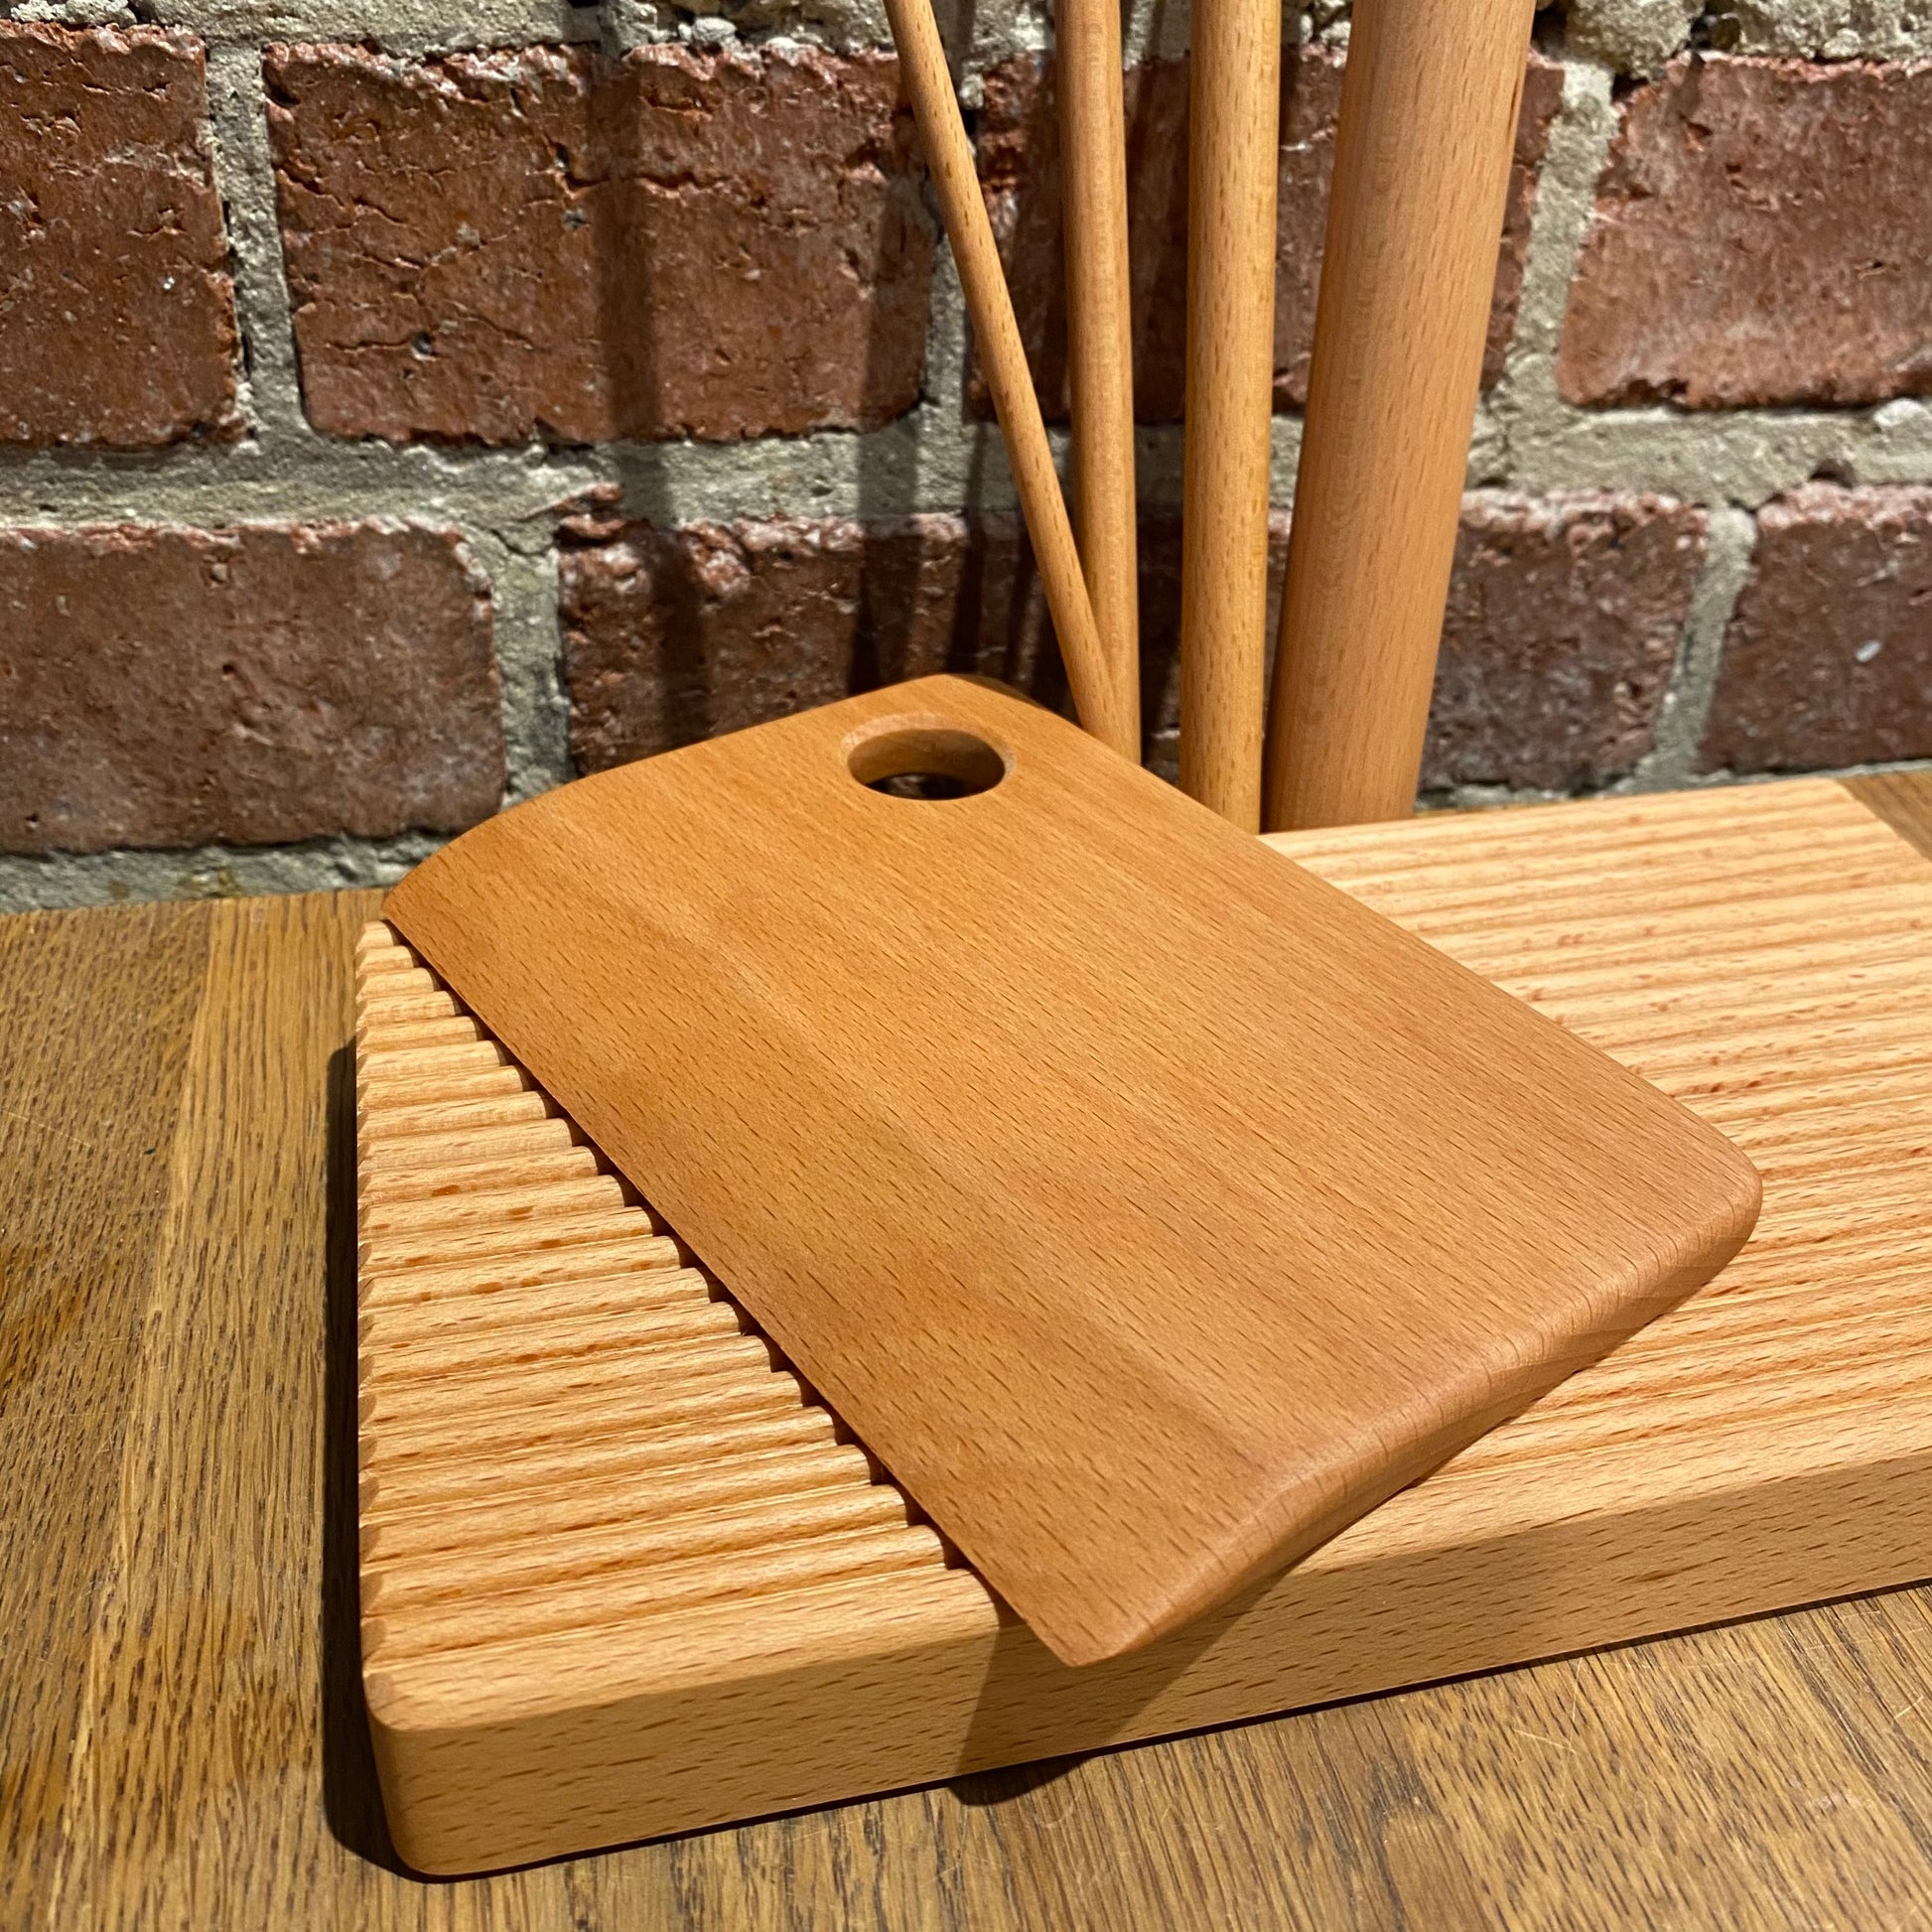 Pasta Making Tools - 6 Piece Pasta Board Set - Dark Wood